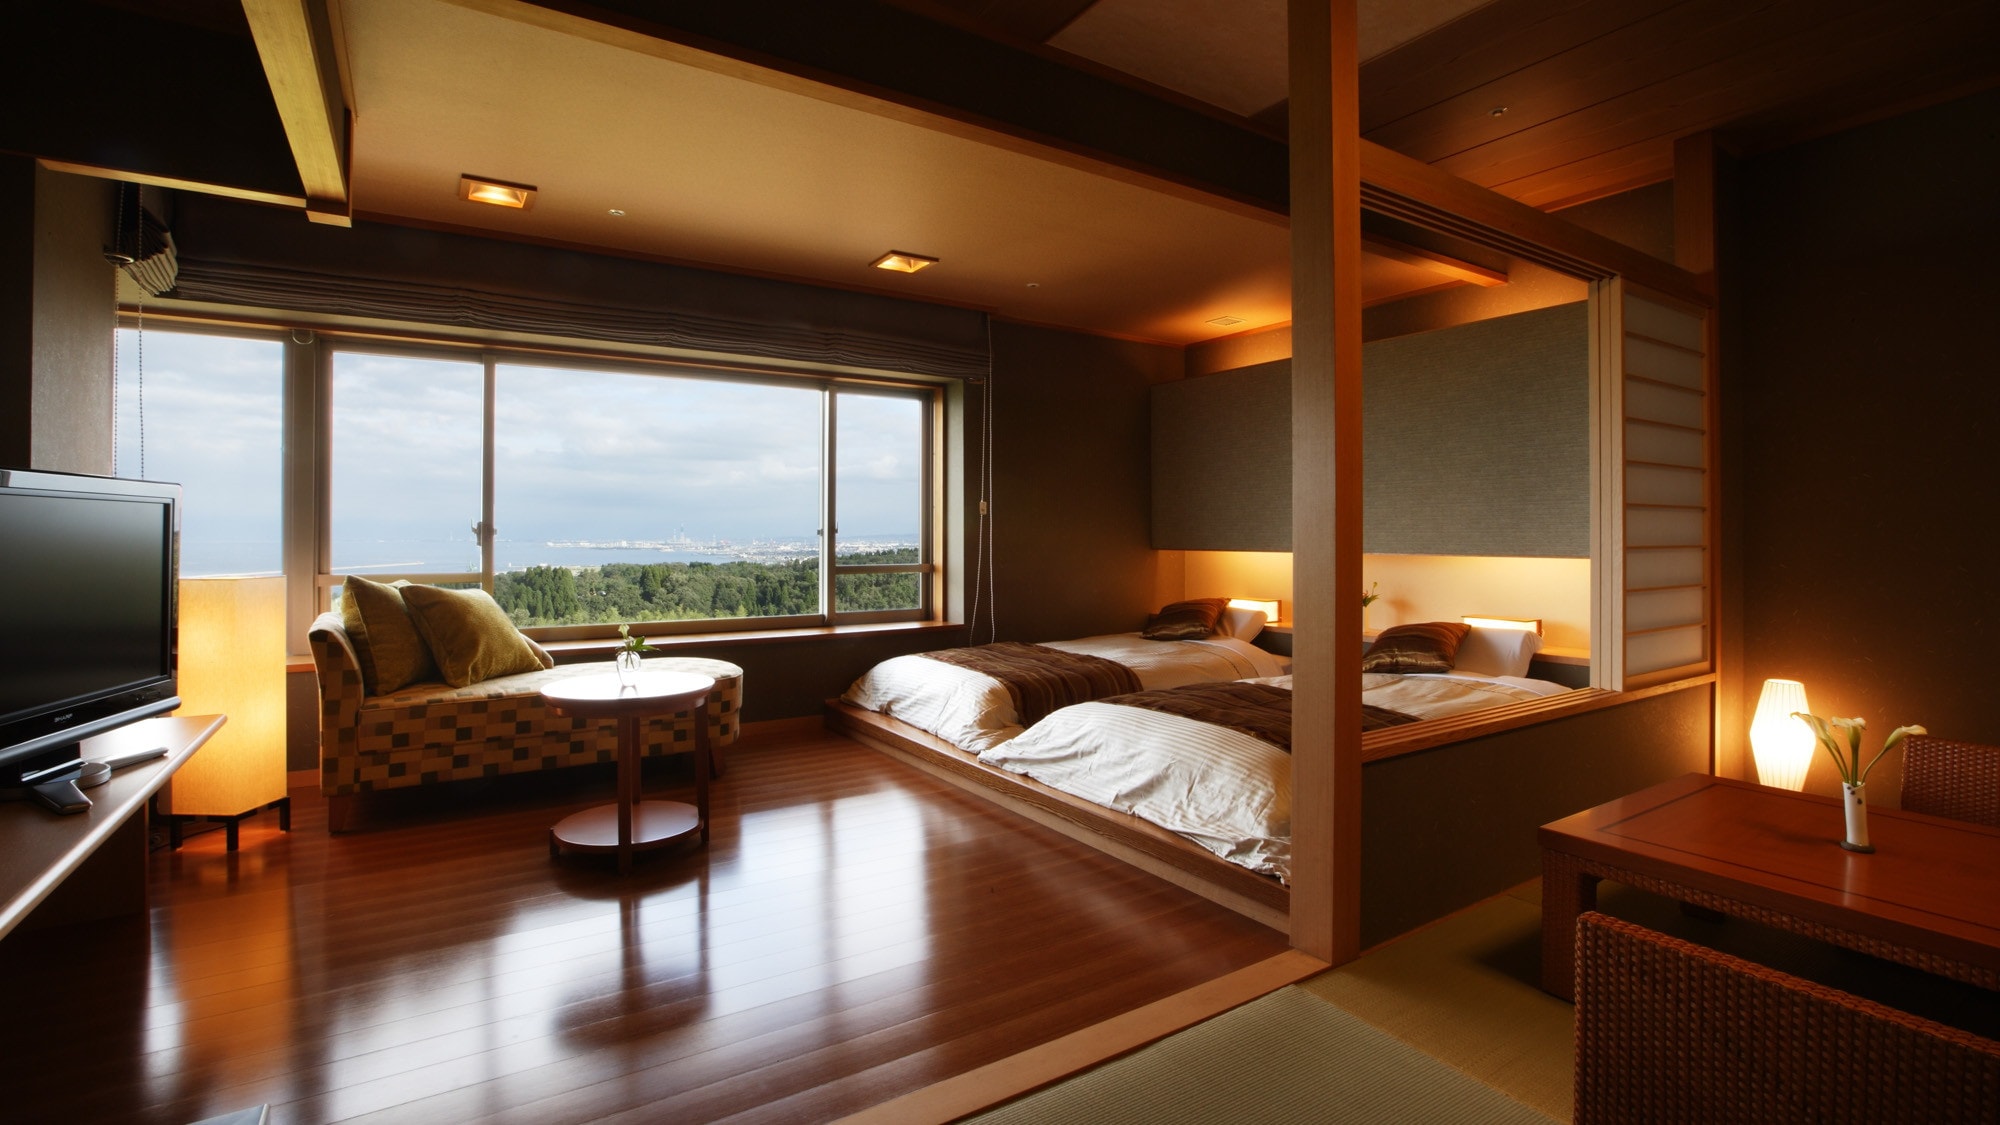 Lantai atas "Taman Surgawi" kamar Jepang dan Barat